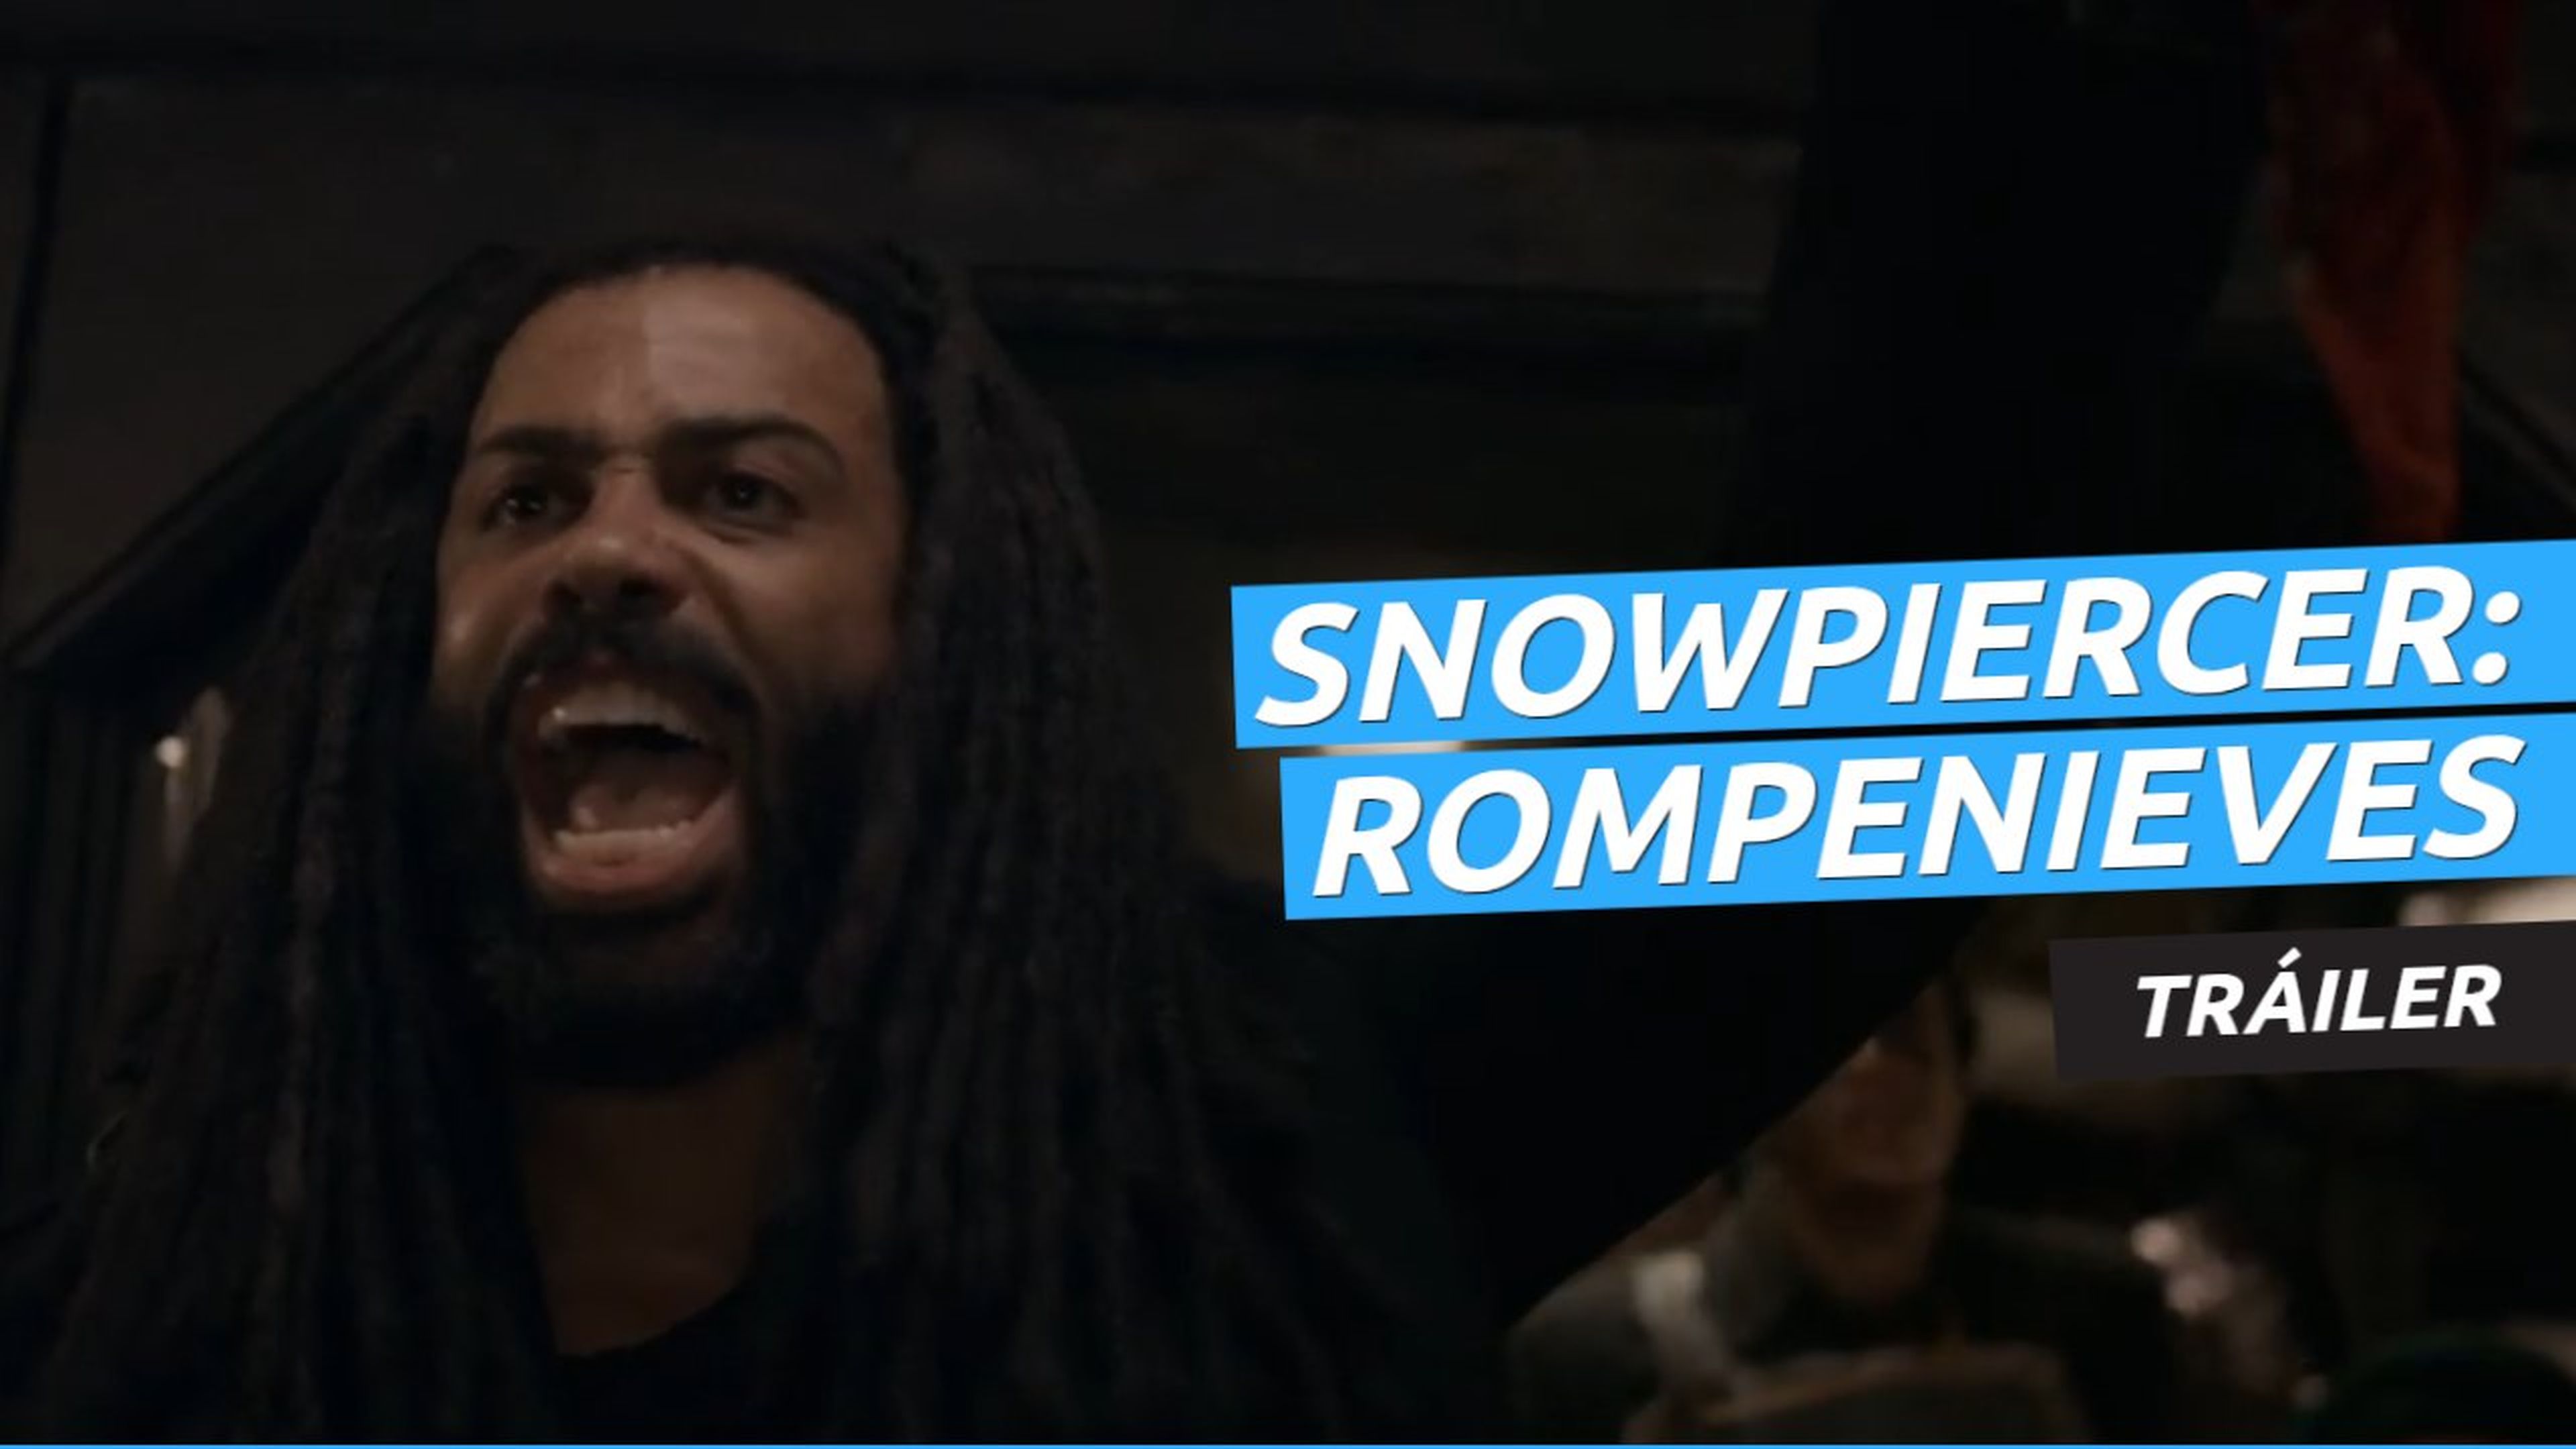 Snowpiercer: Rompenieves - Segundo tráiler de la serie de Netflix